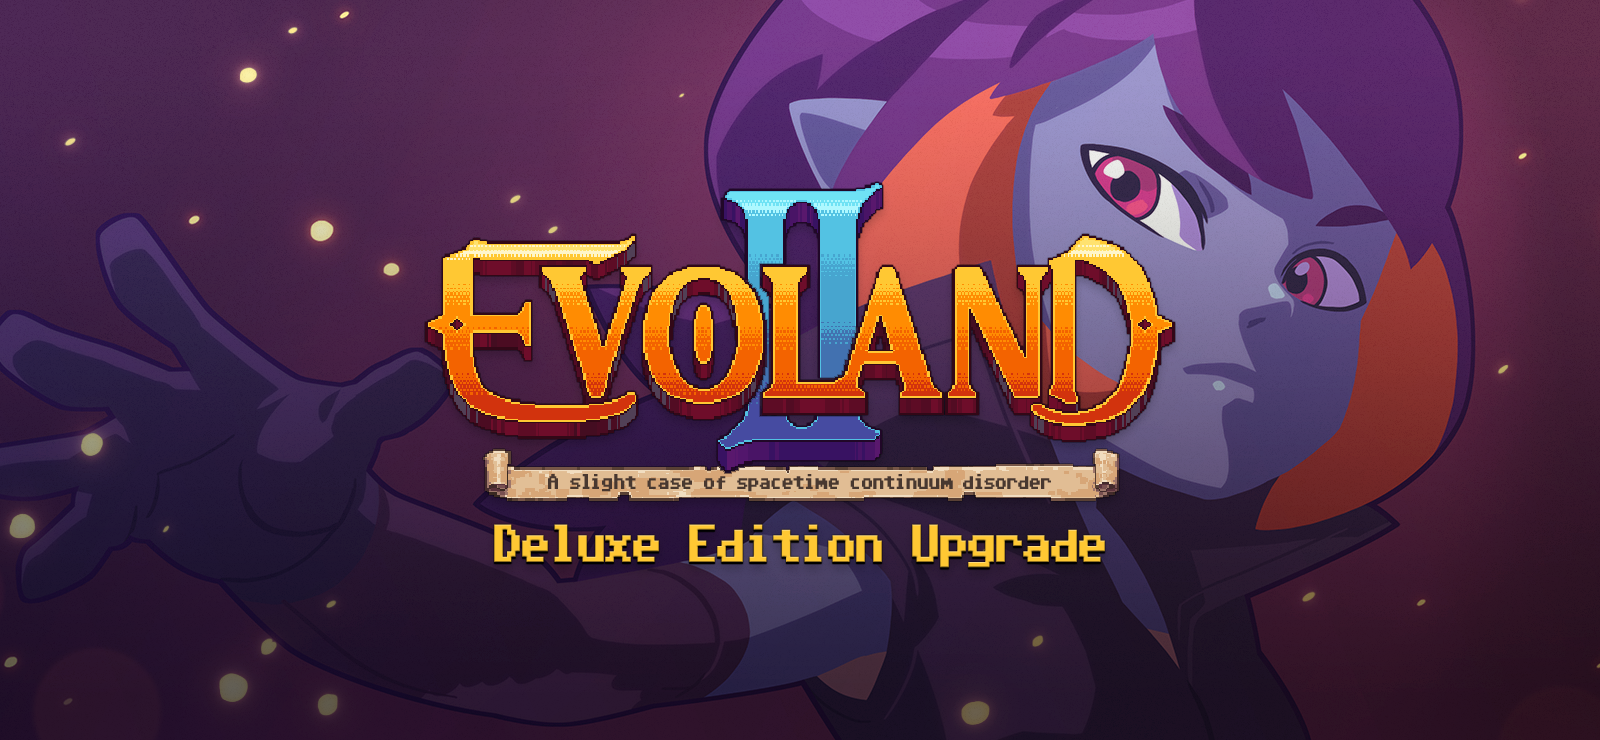 Evoland 2 Deluxe Edition Upgrade